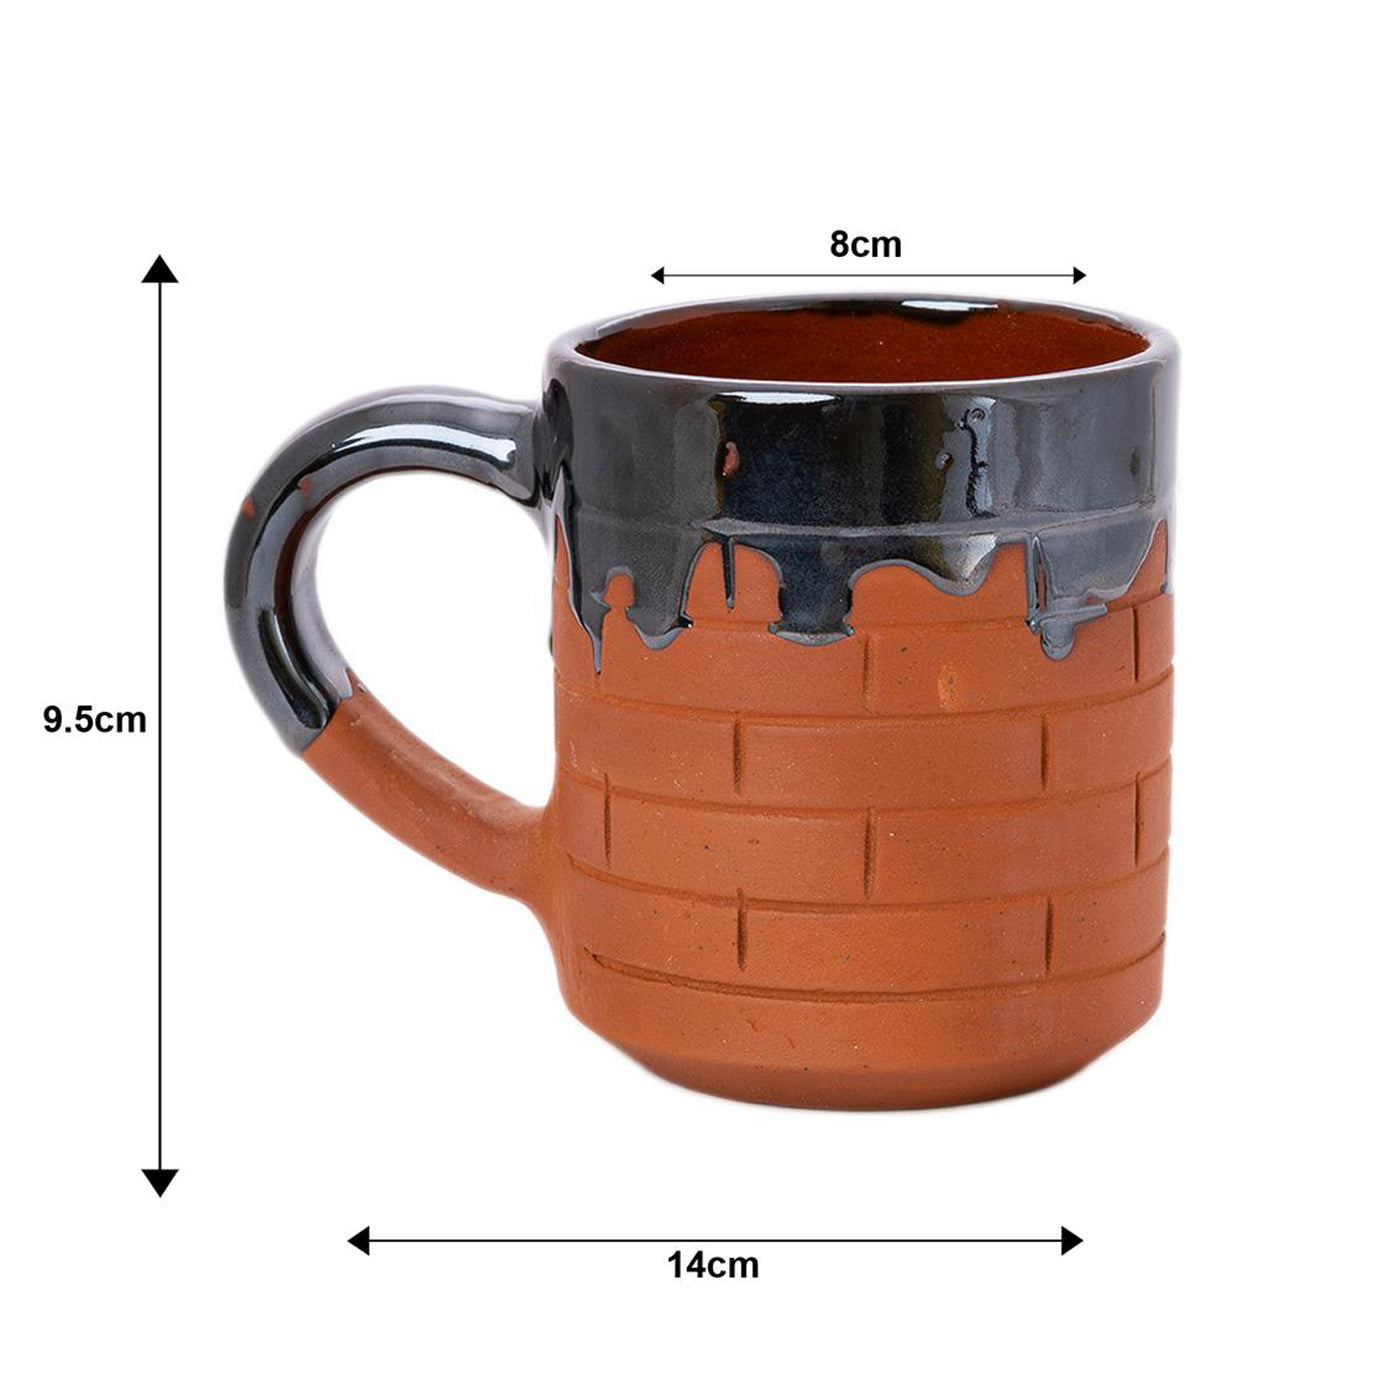 Sculpted Terracotta Coffee Mug Stylish Functionality